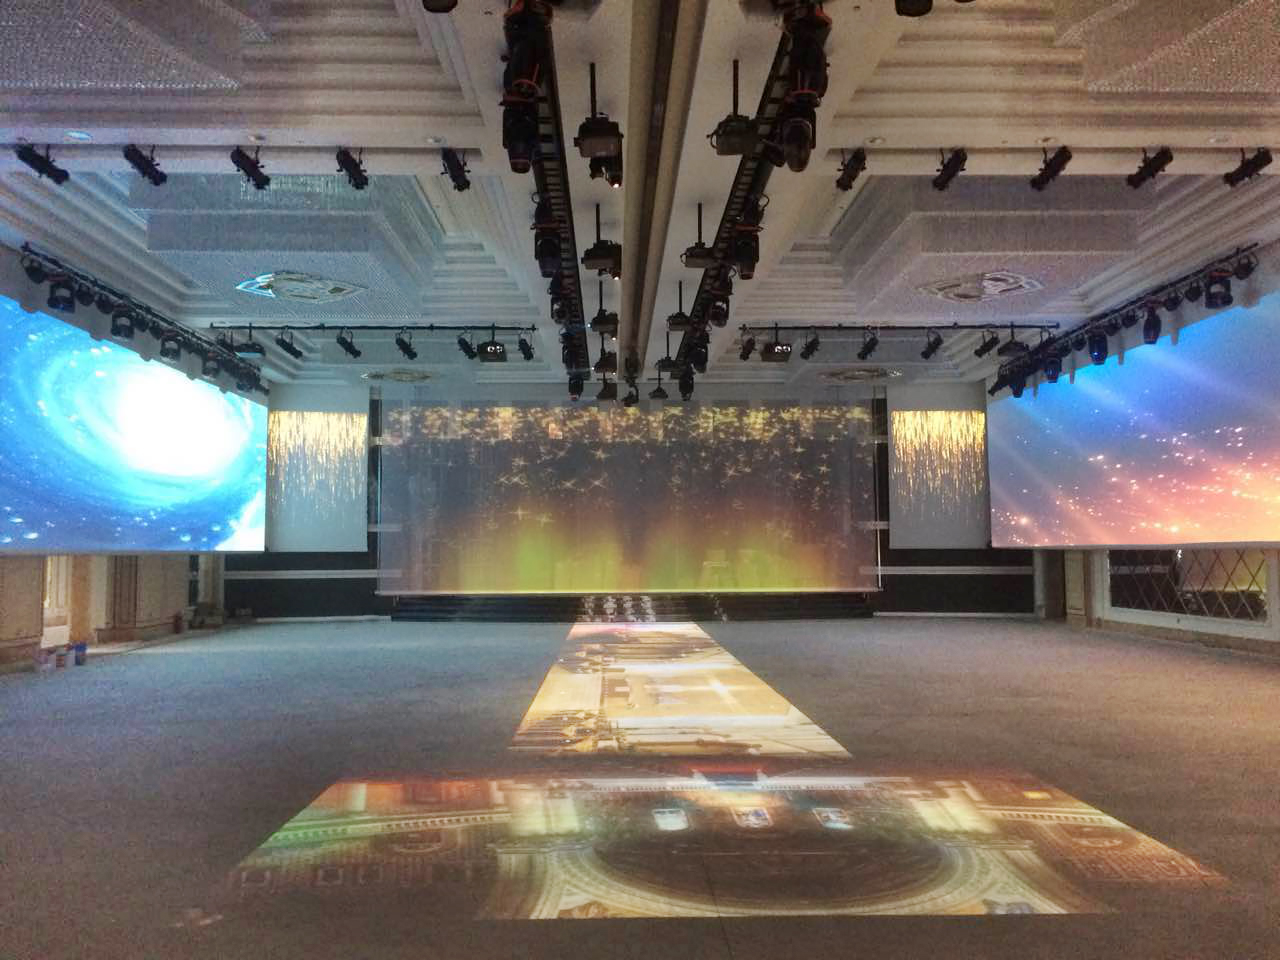 SNOWHITE huge screen to build the wedding holographic corridor